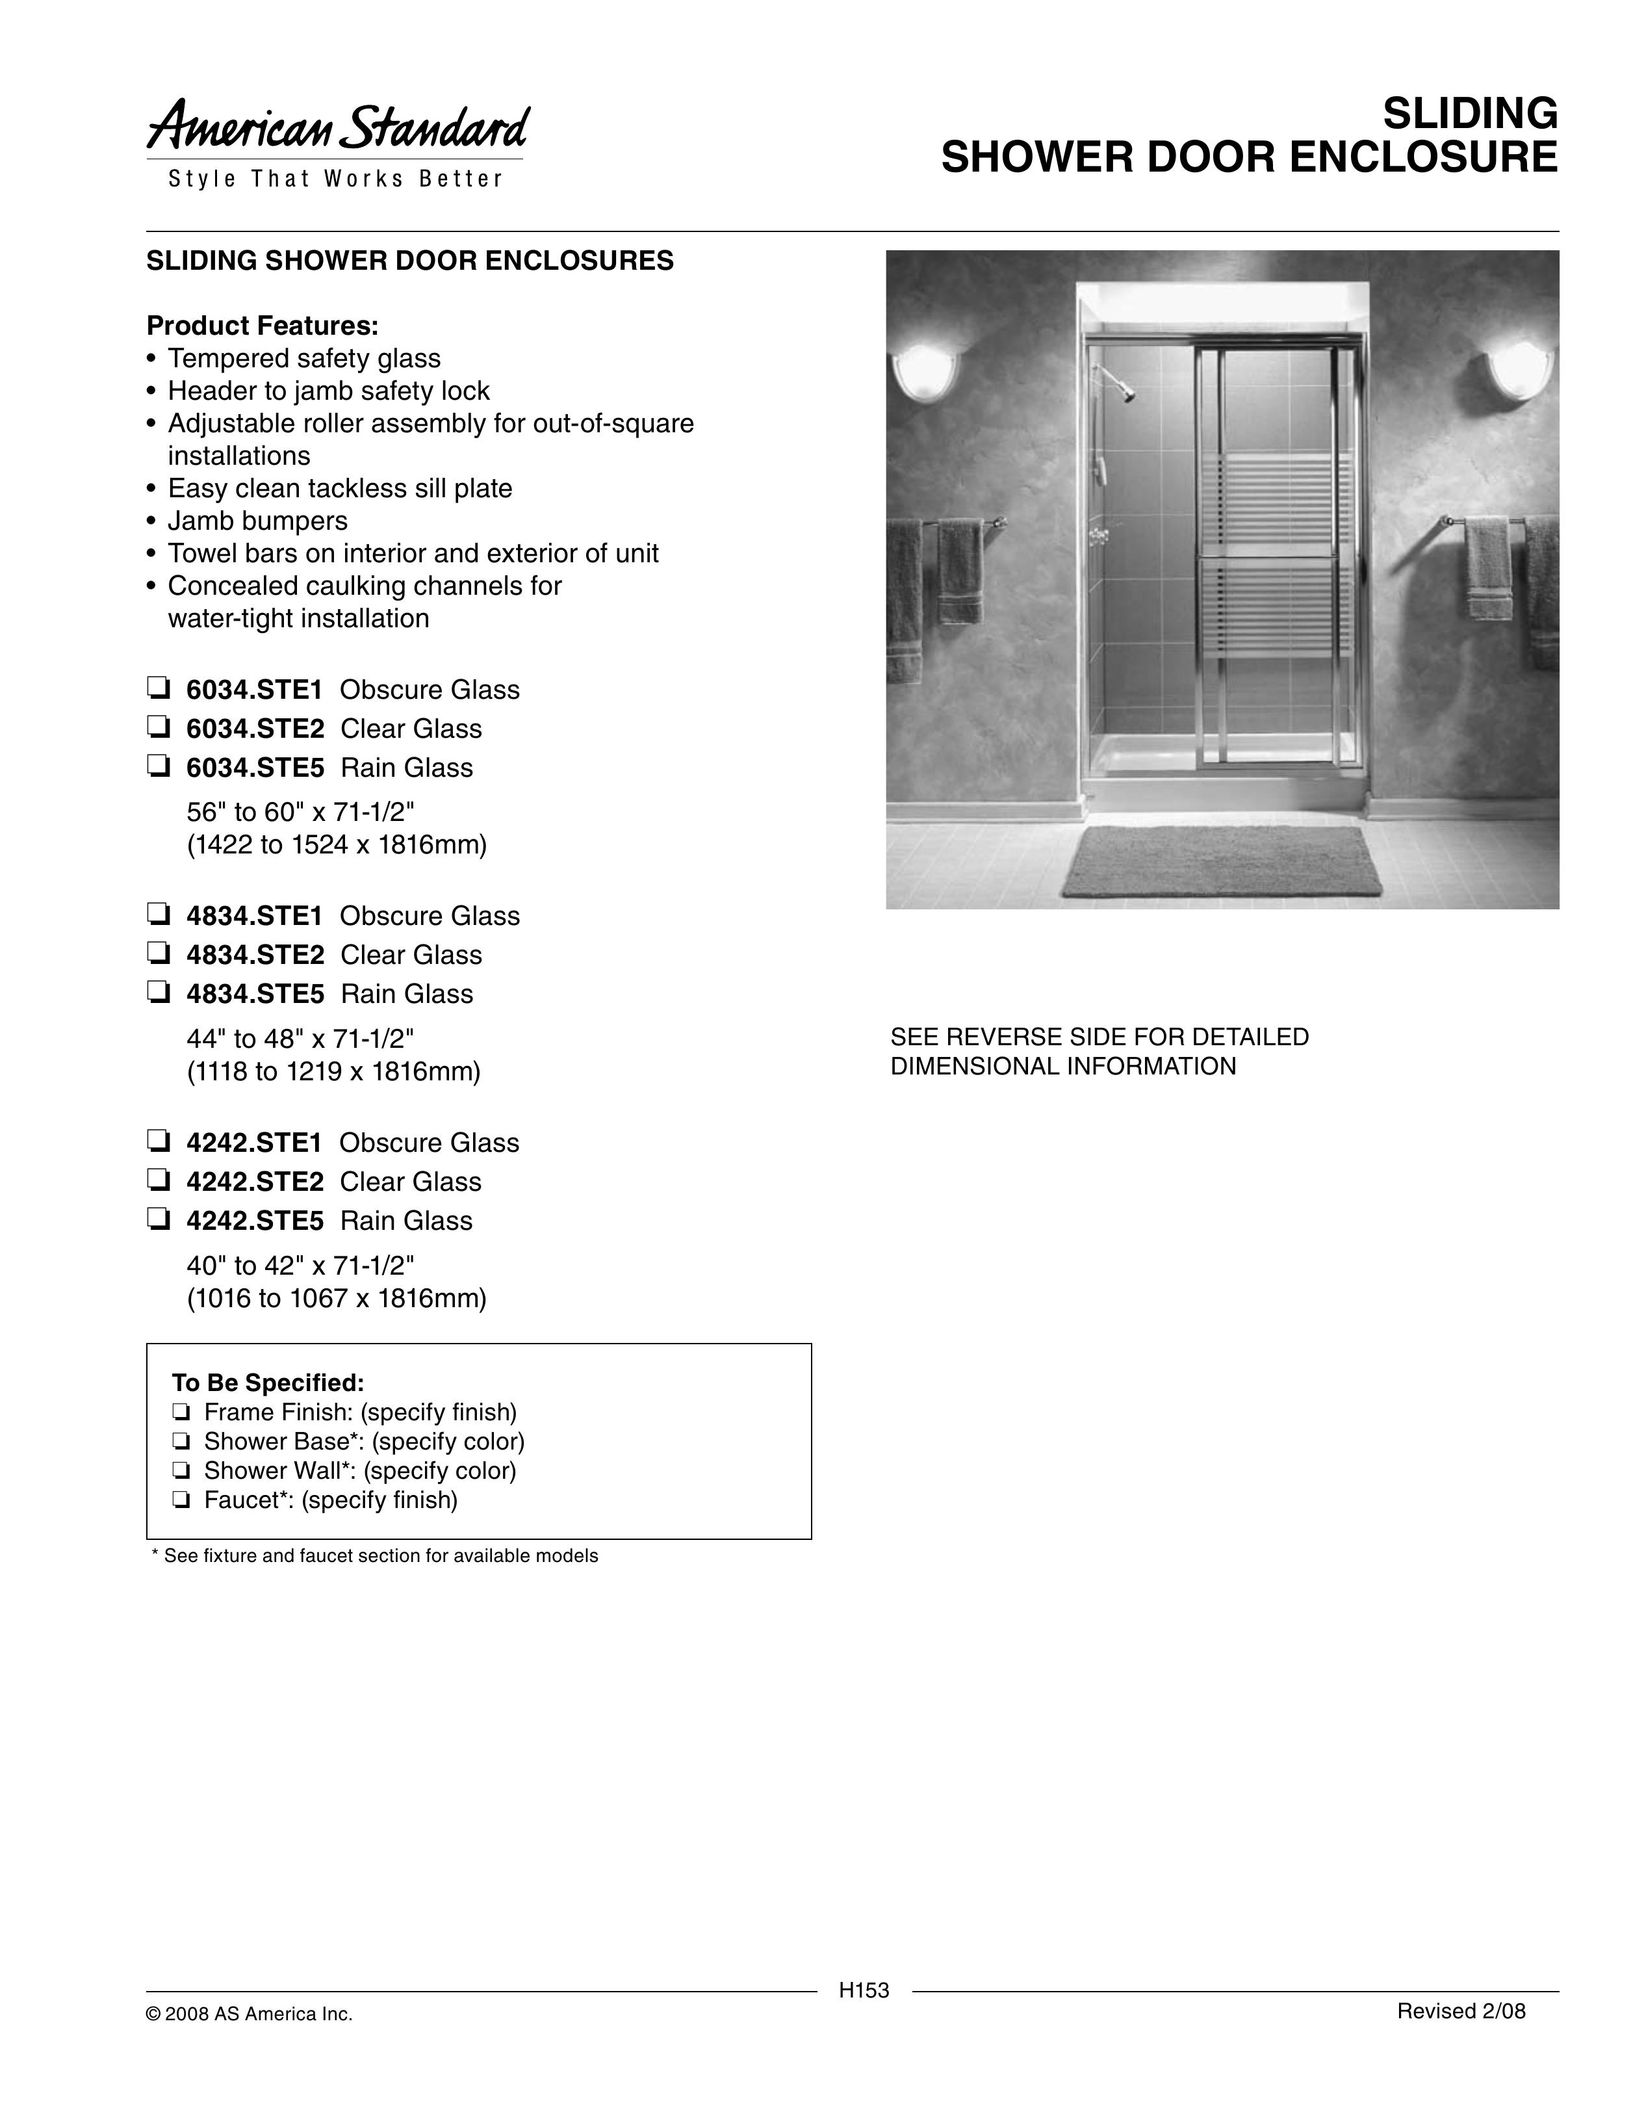 American Standard 4242.STE2 Door User Manual